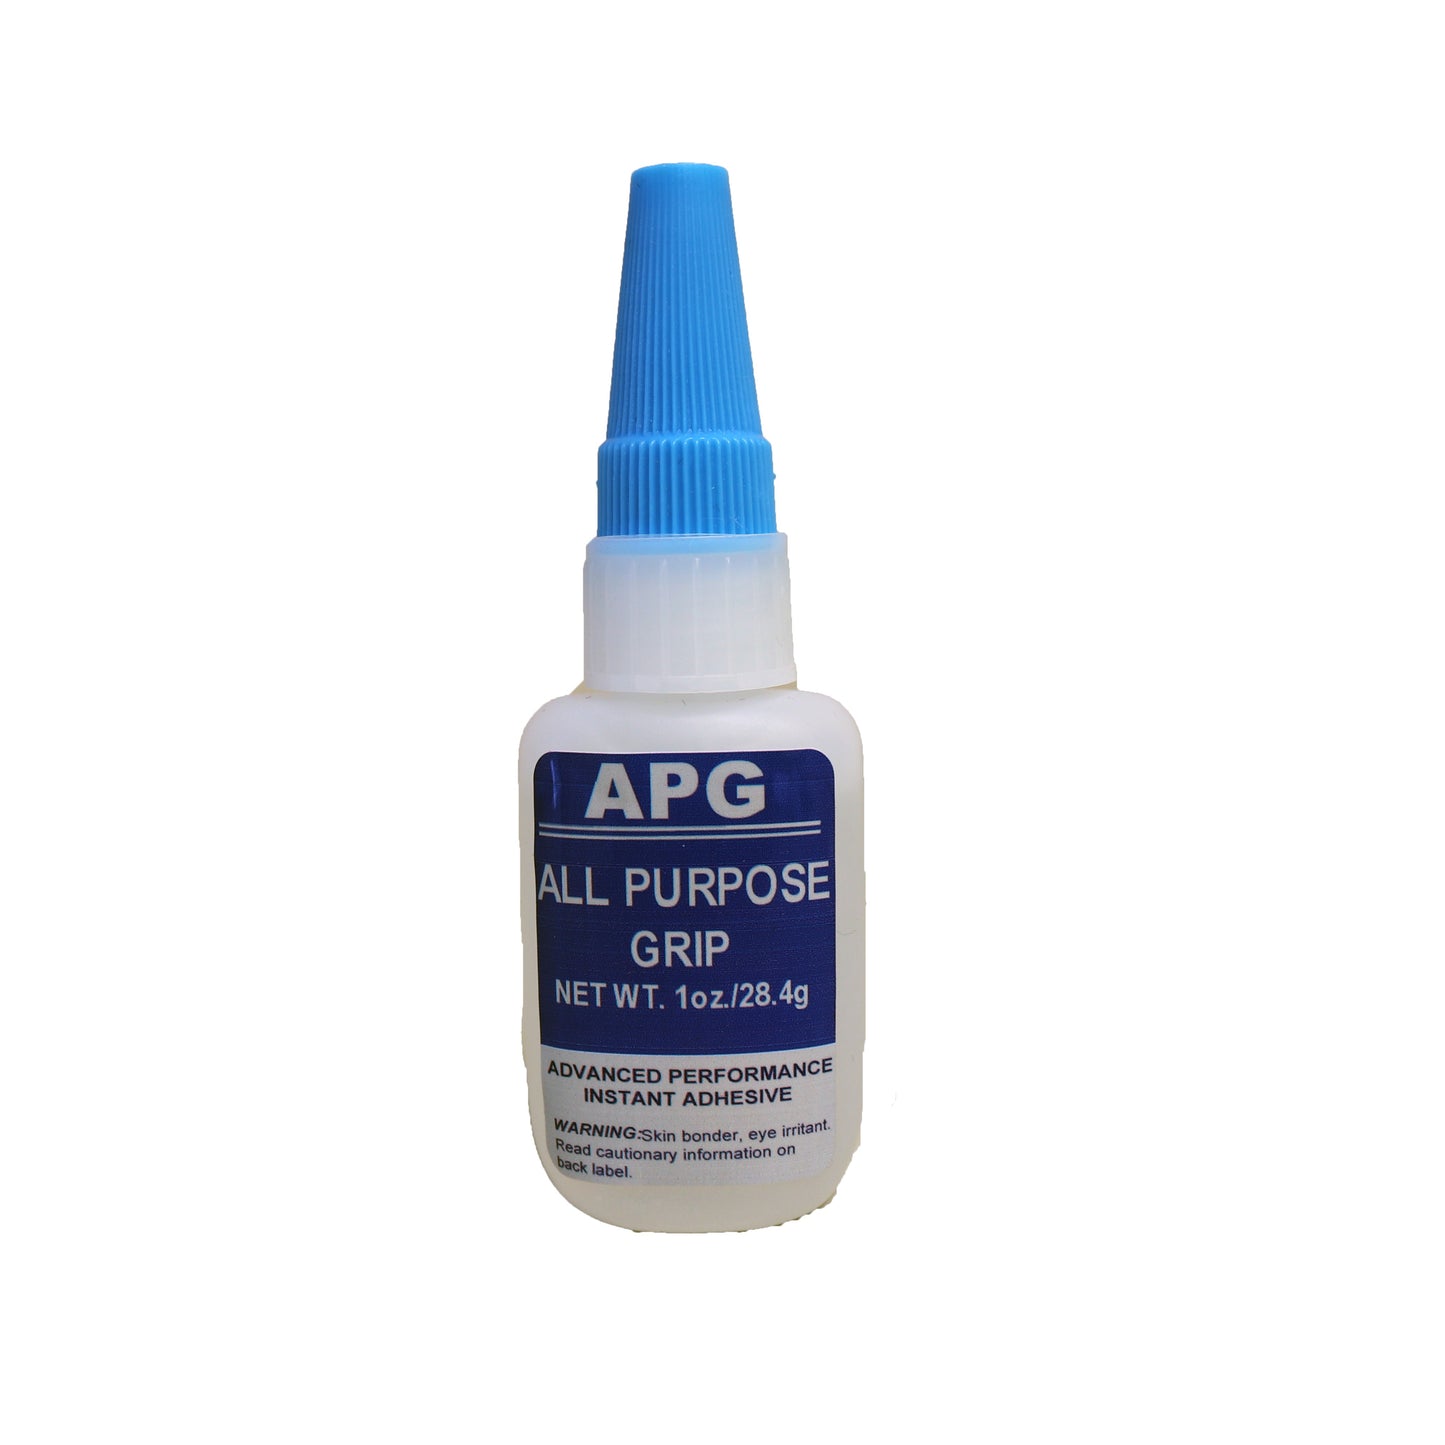 All Purpose Grip Adhesive